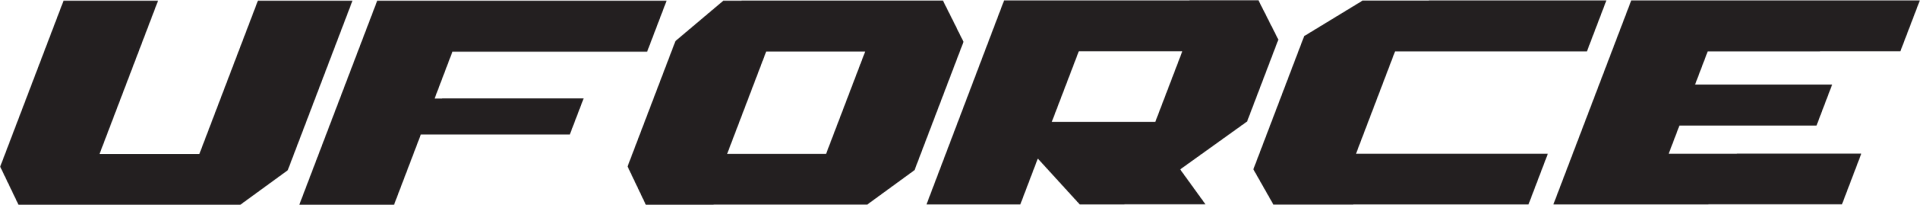 UFORCE 600 Logo